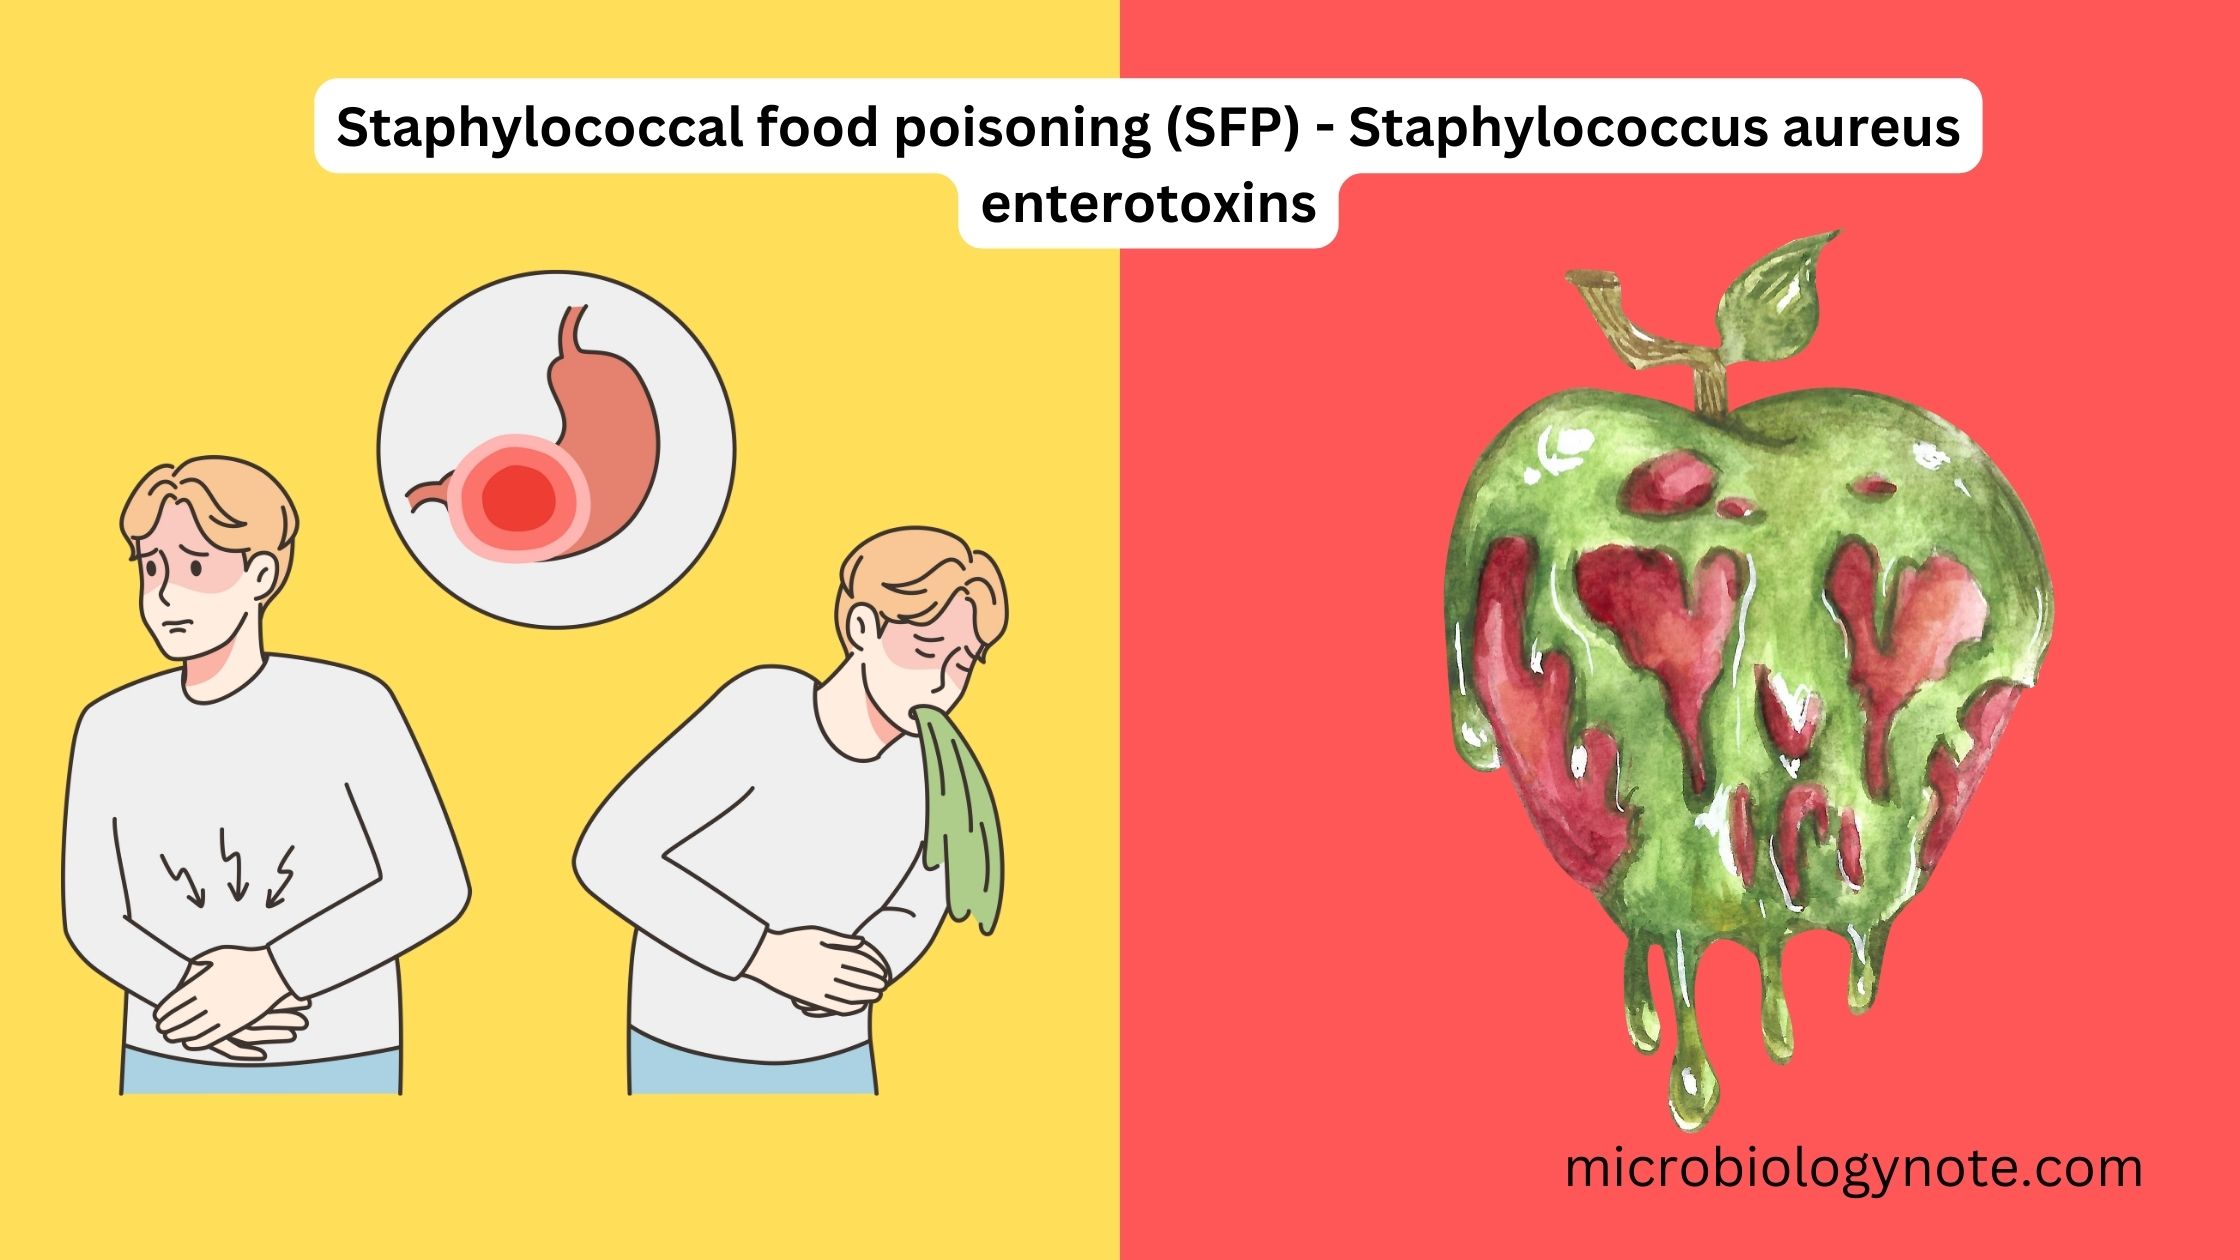 Staphylococcal food poisoning (SFP) - Staphylococcus aureus enterotoxins